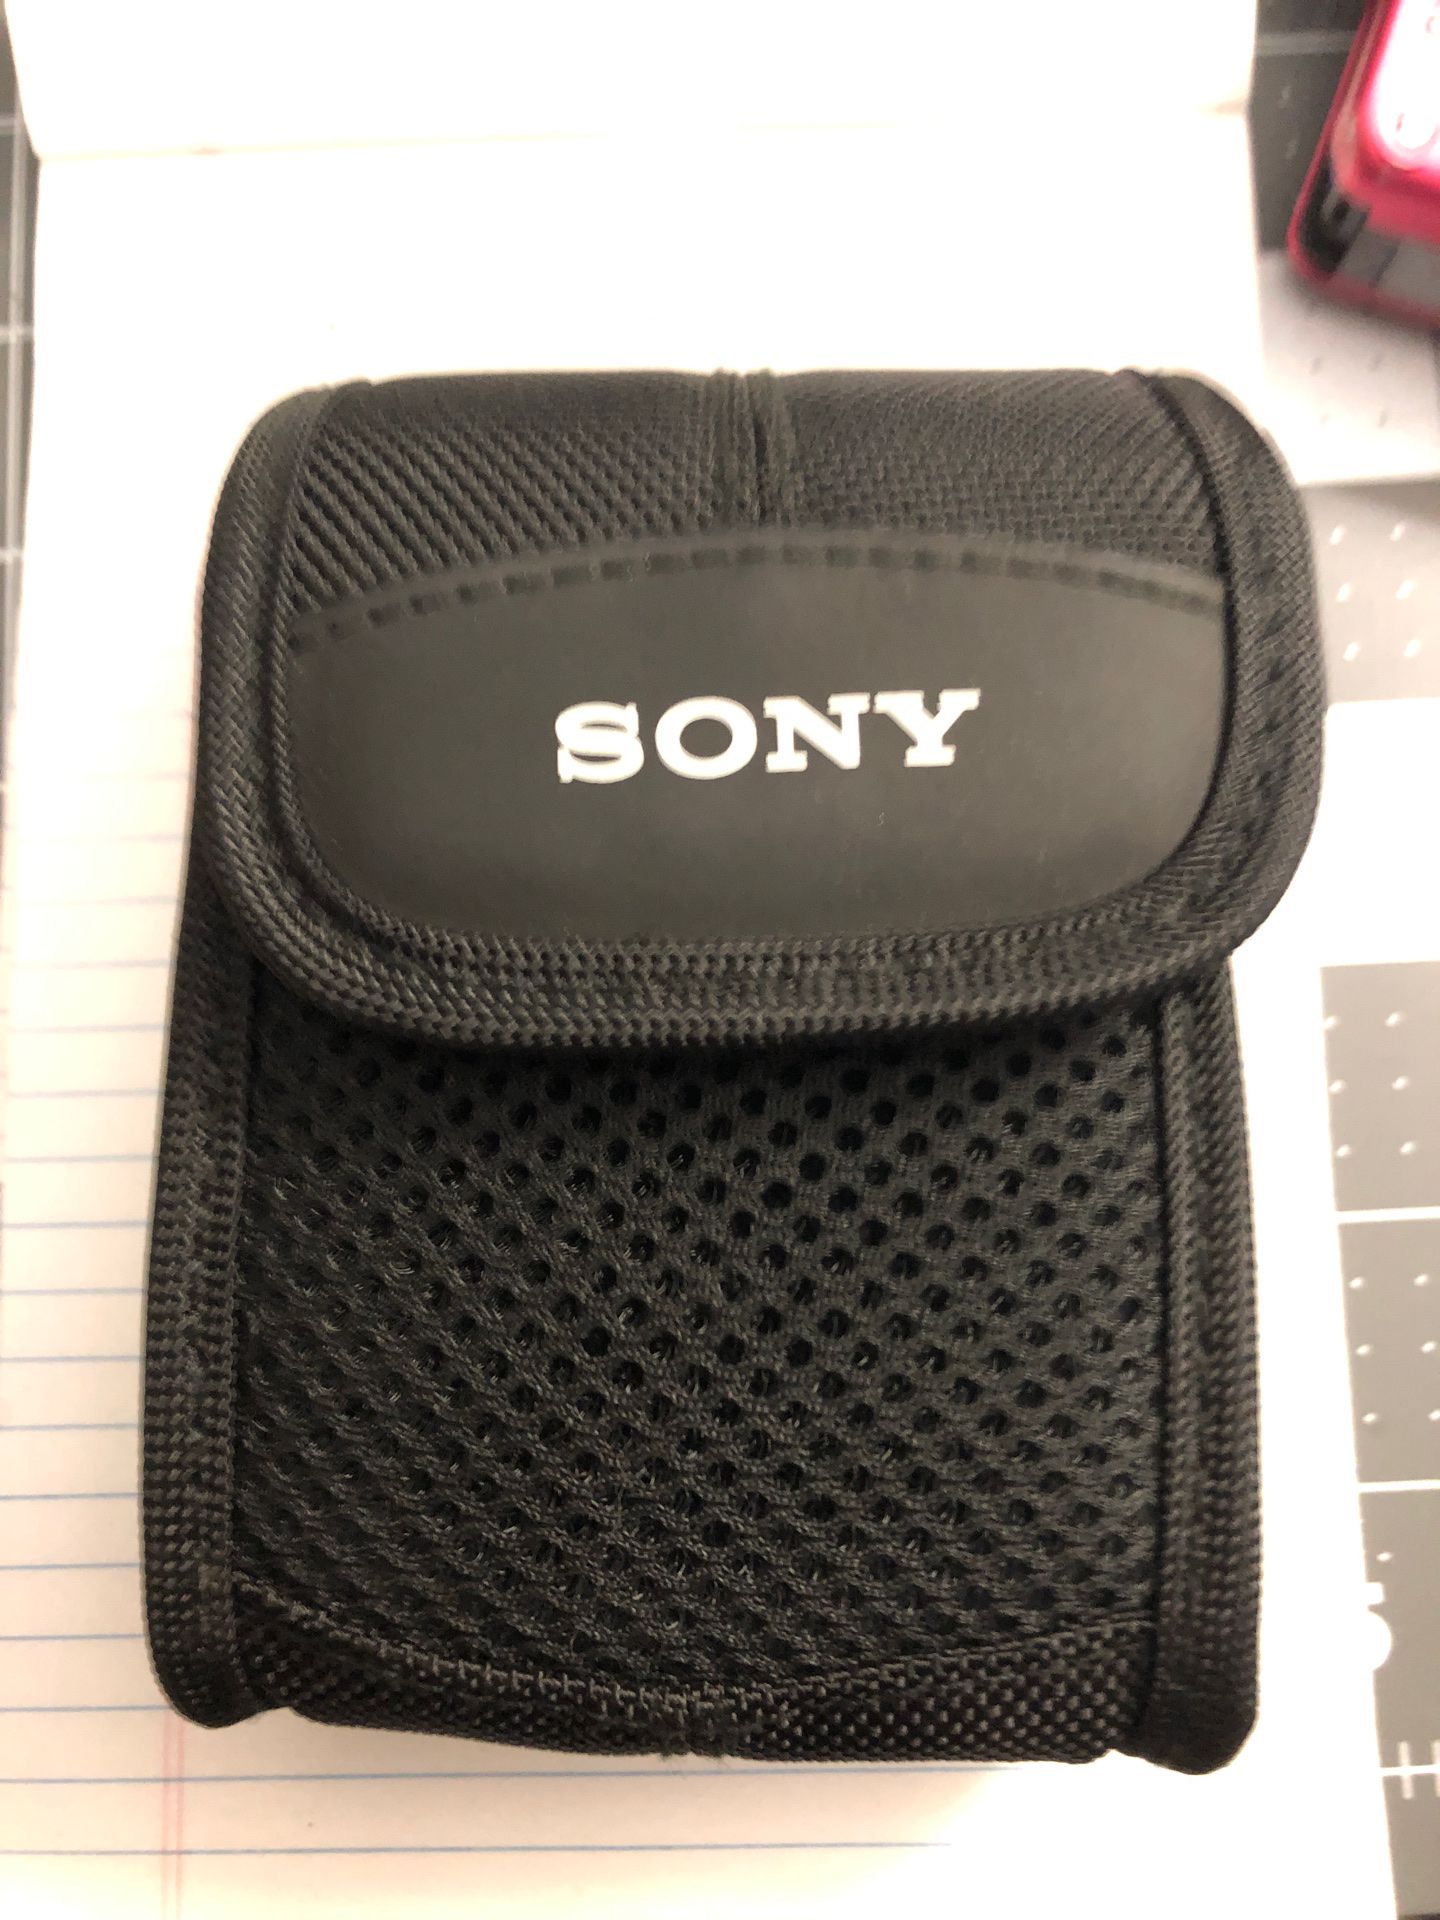 Sony cybershot carrying case